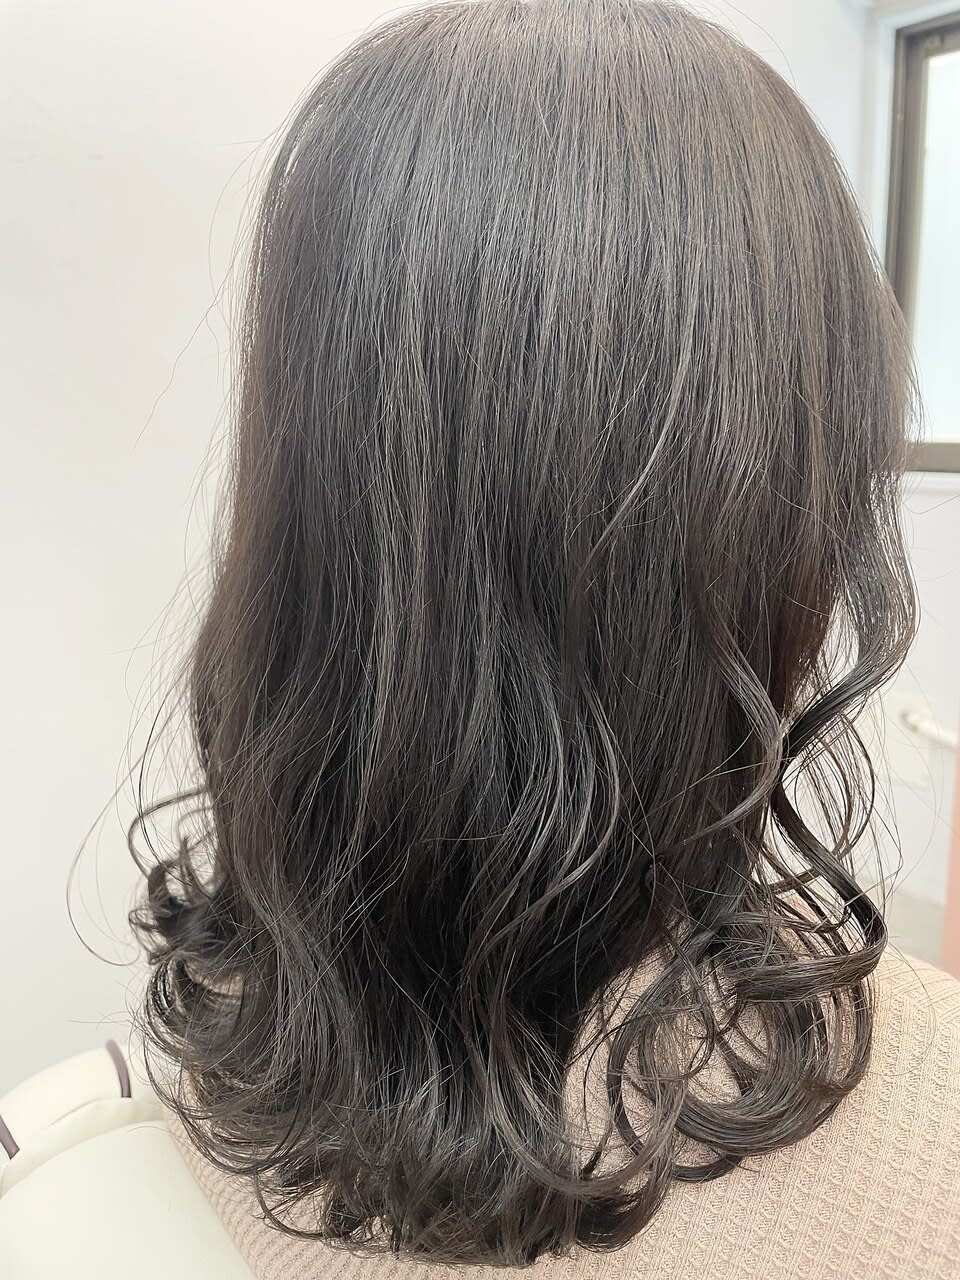 Cya hair salon【シーヤヘアサロン】のスタイル紹介。【髪質改善】【白髪予防】イルミナカラーでグレイアッシュ